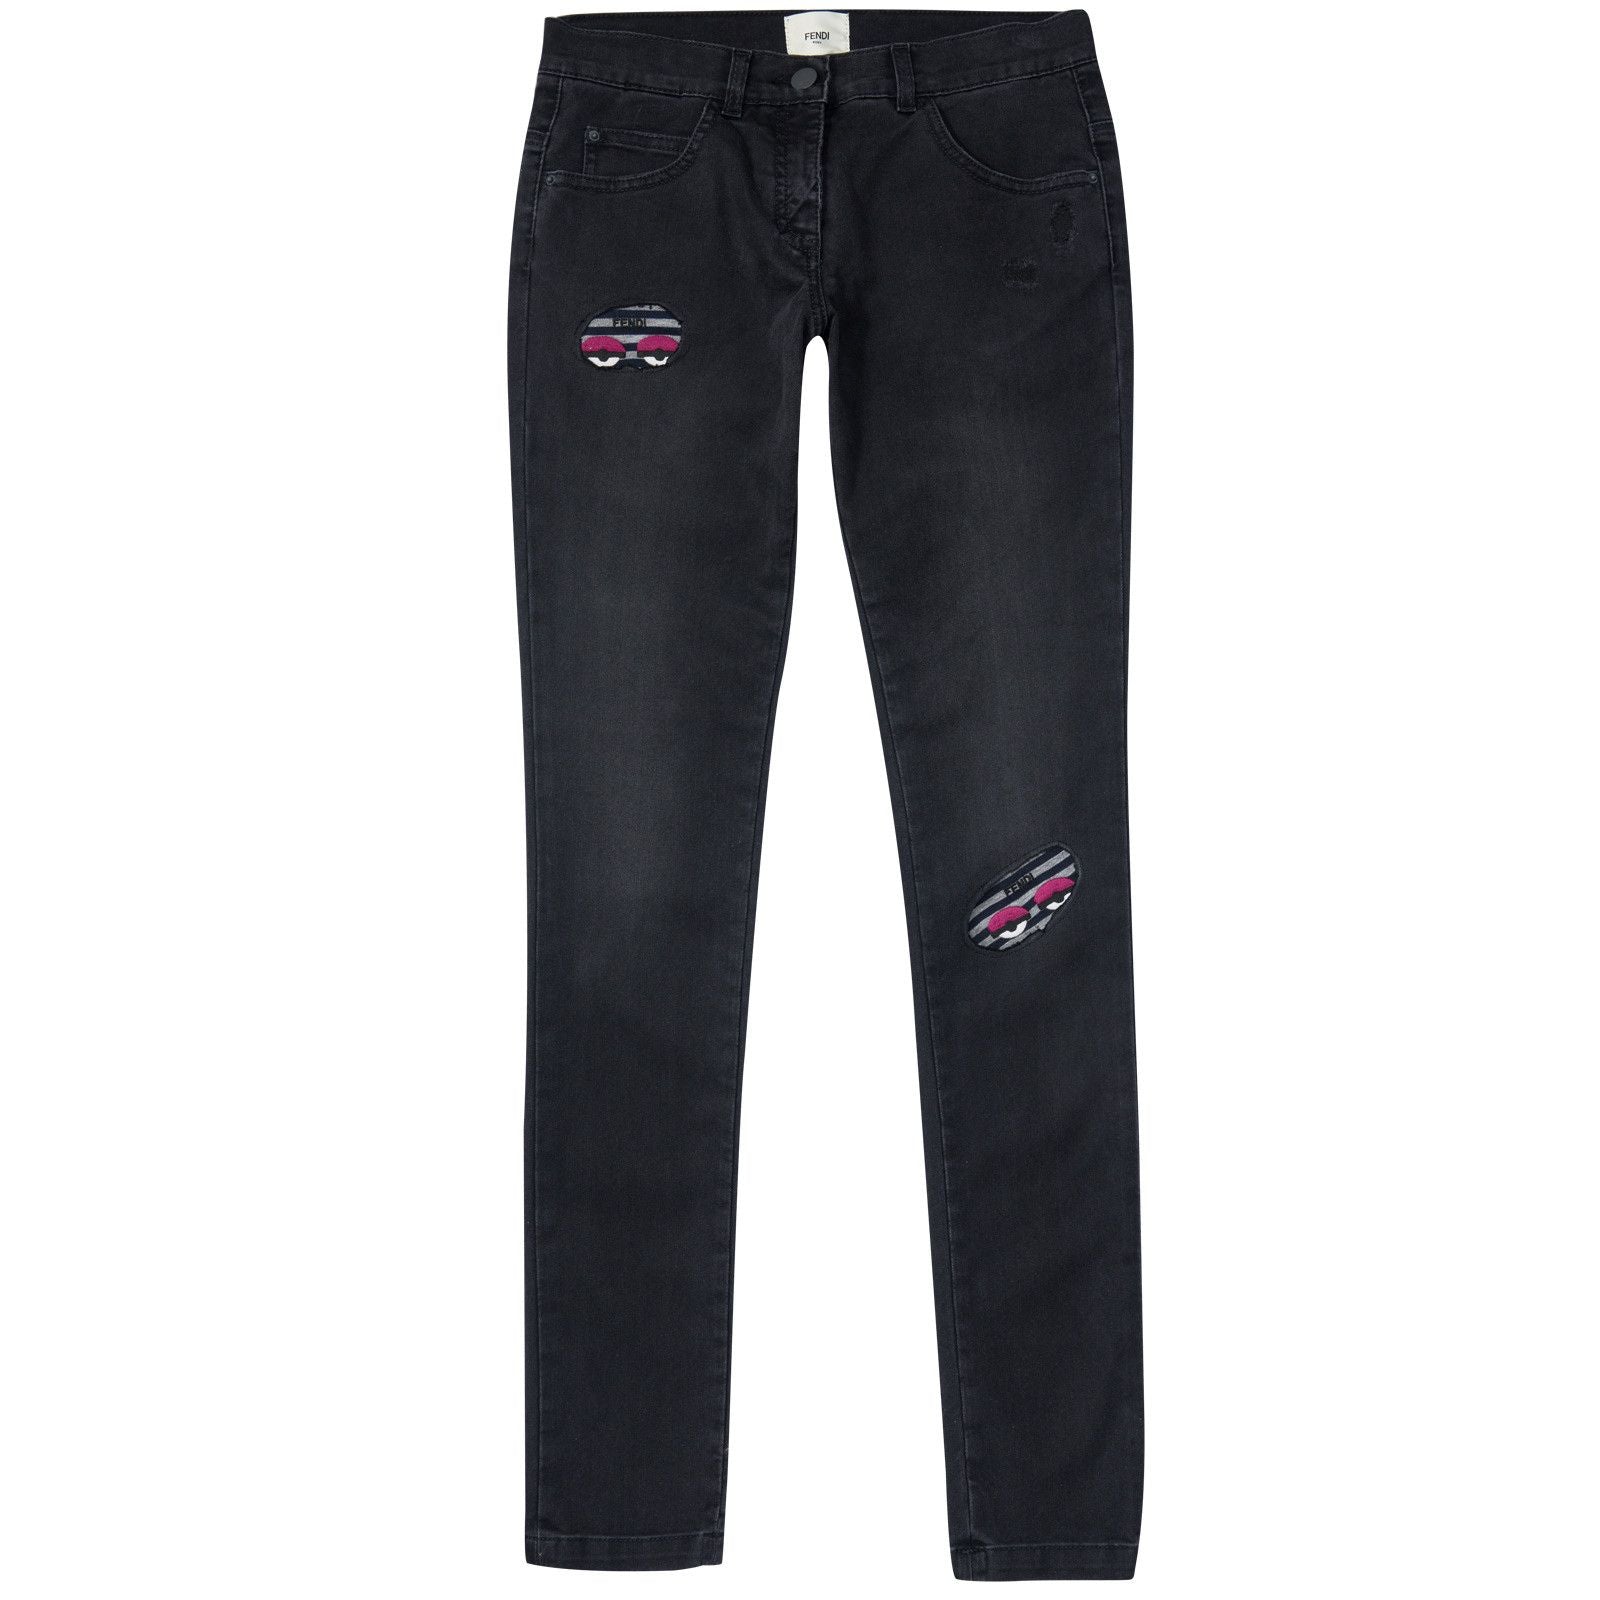 Girls Black Monster Slim Fit Jeans - CÉMAROSE | Children's Fashion Store - 1